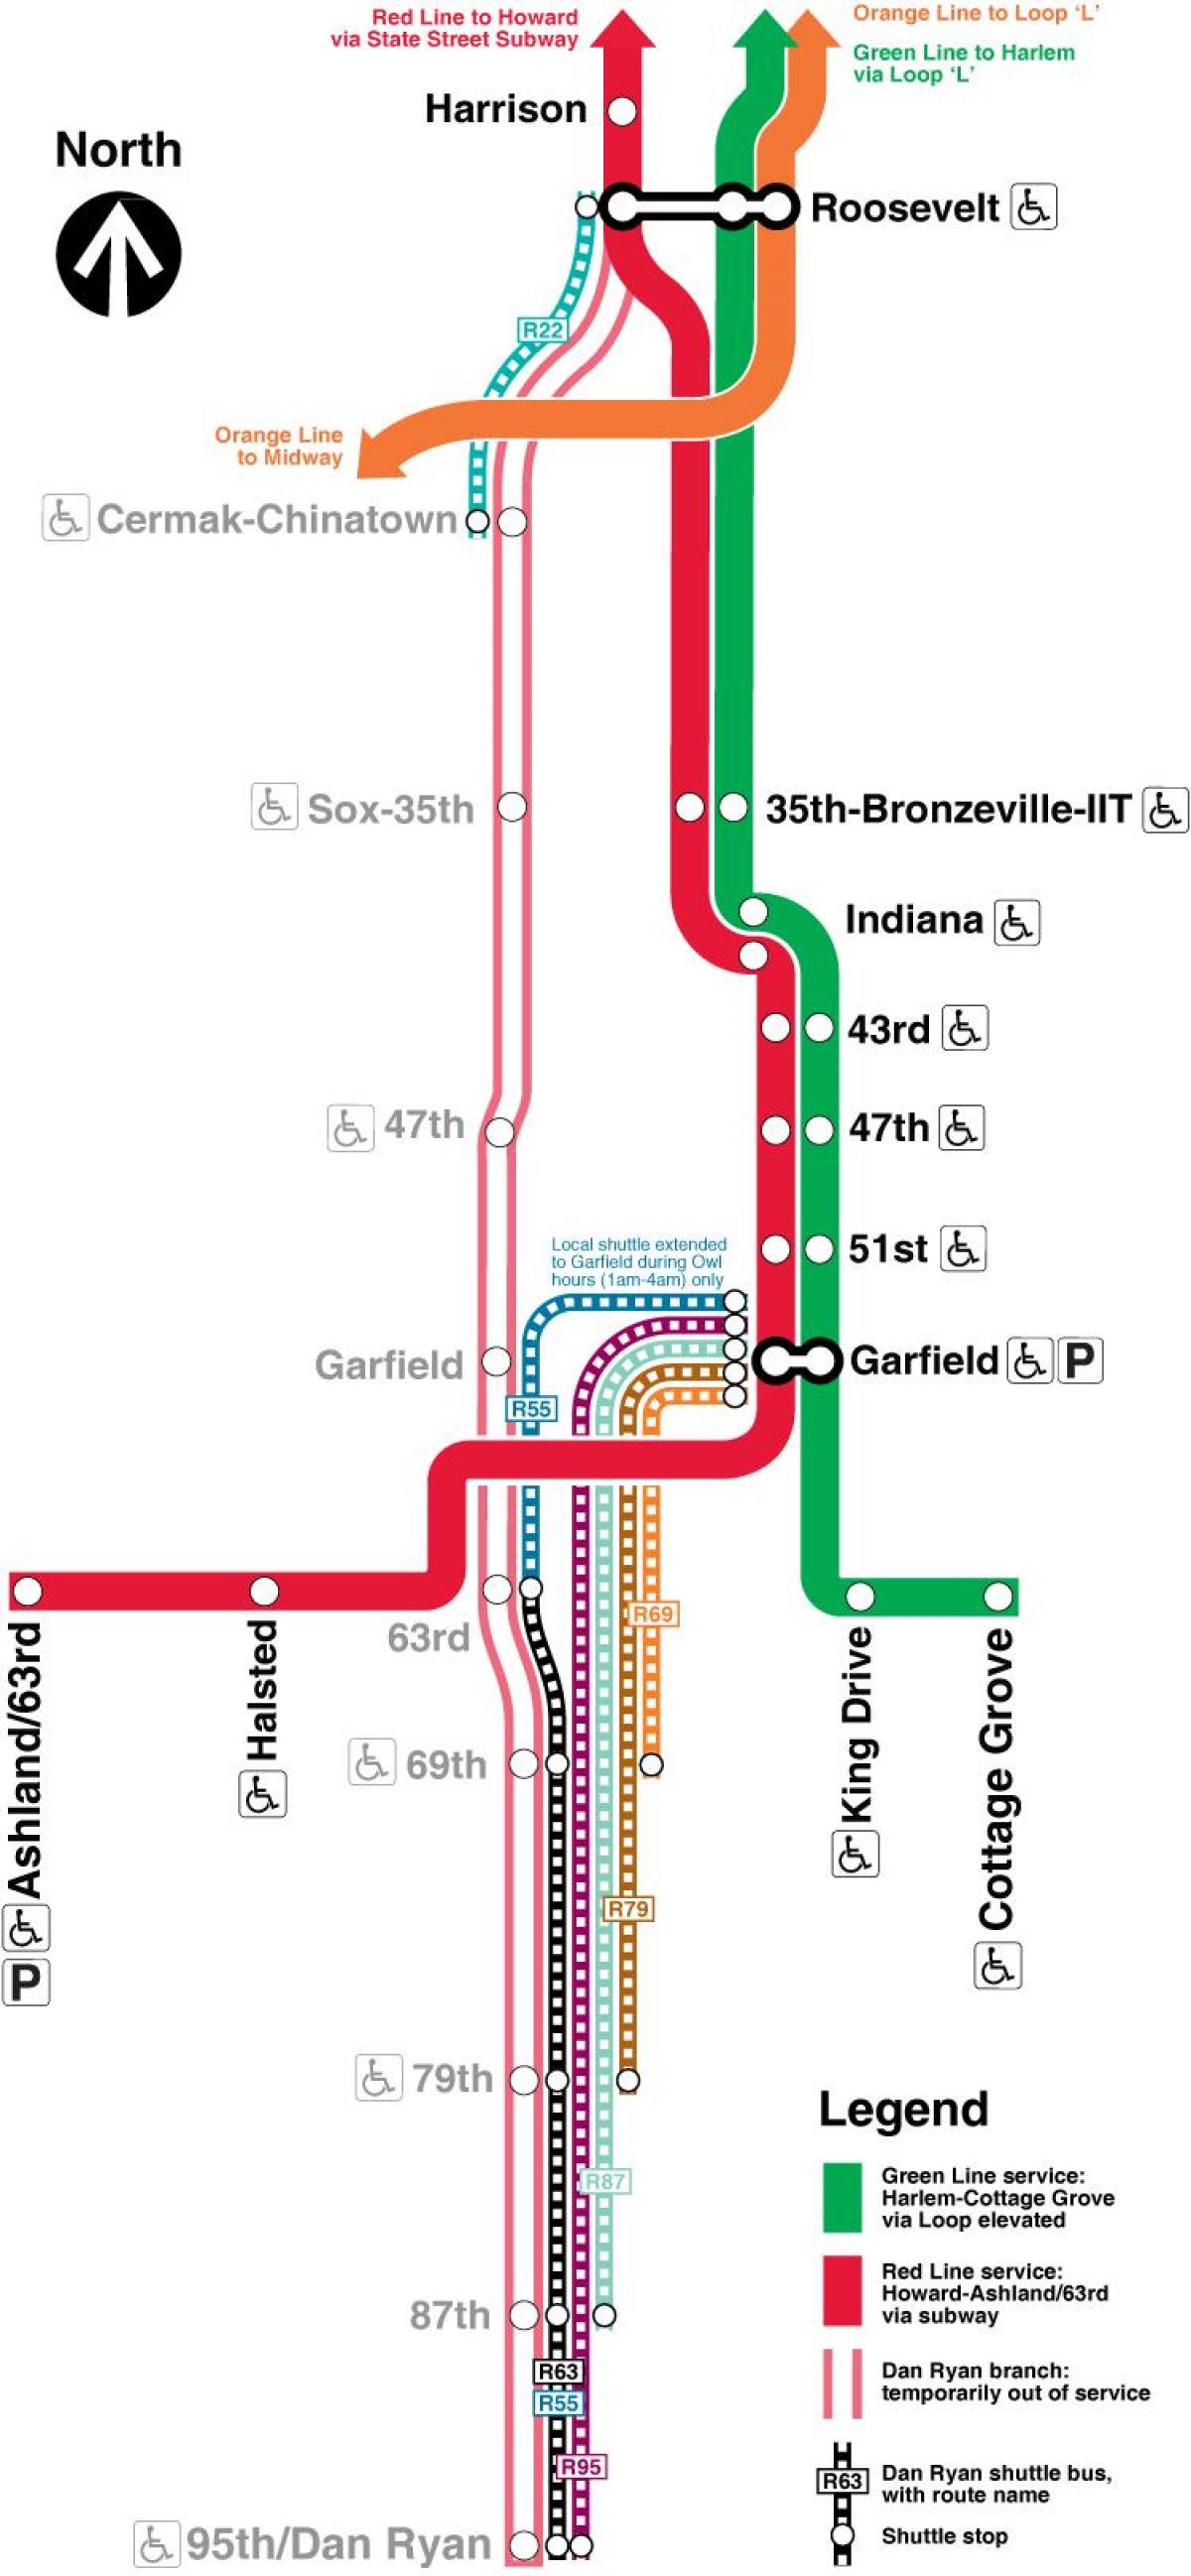 शिकागो सीटीए लाल रेखा के नक्शे